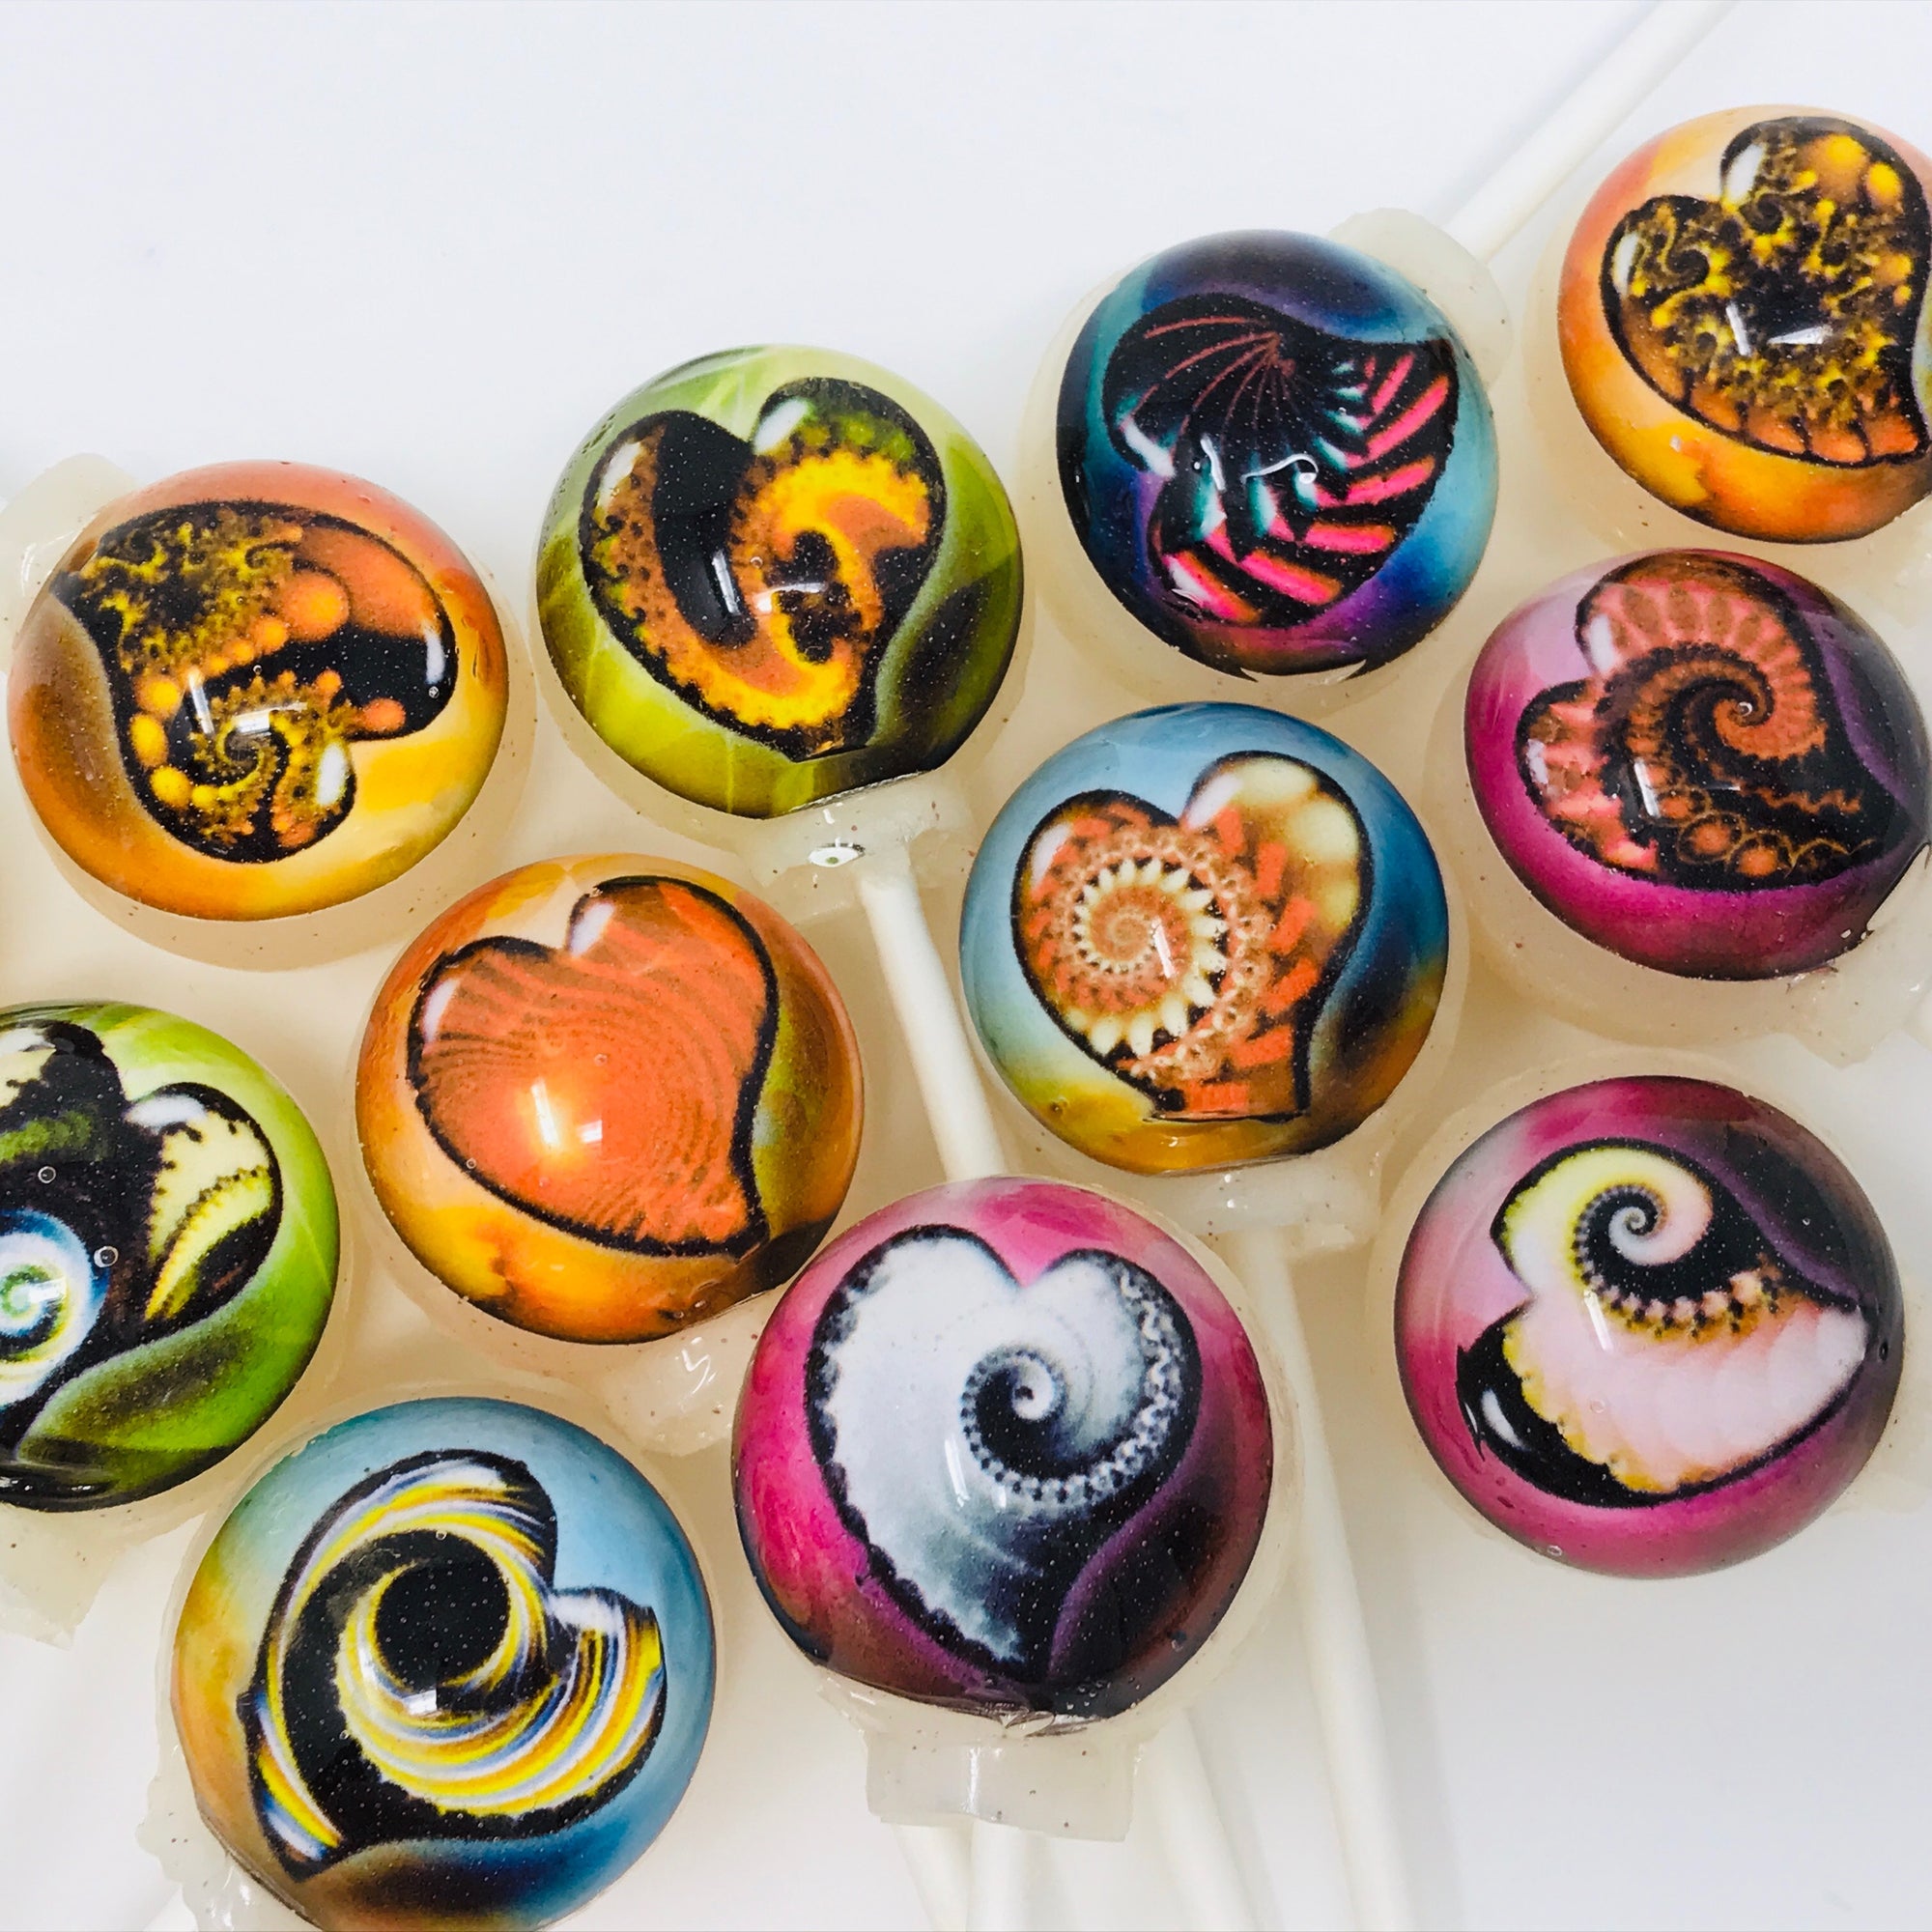 Fractal Heart Lollipops 6-piece set by I Want Candy!